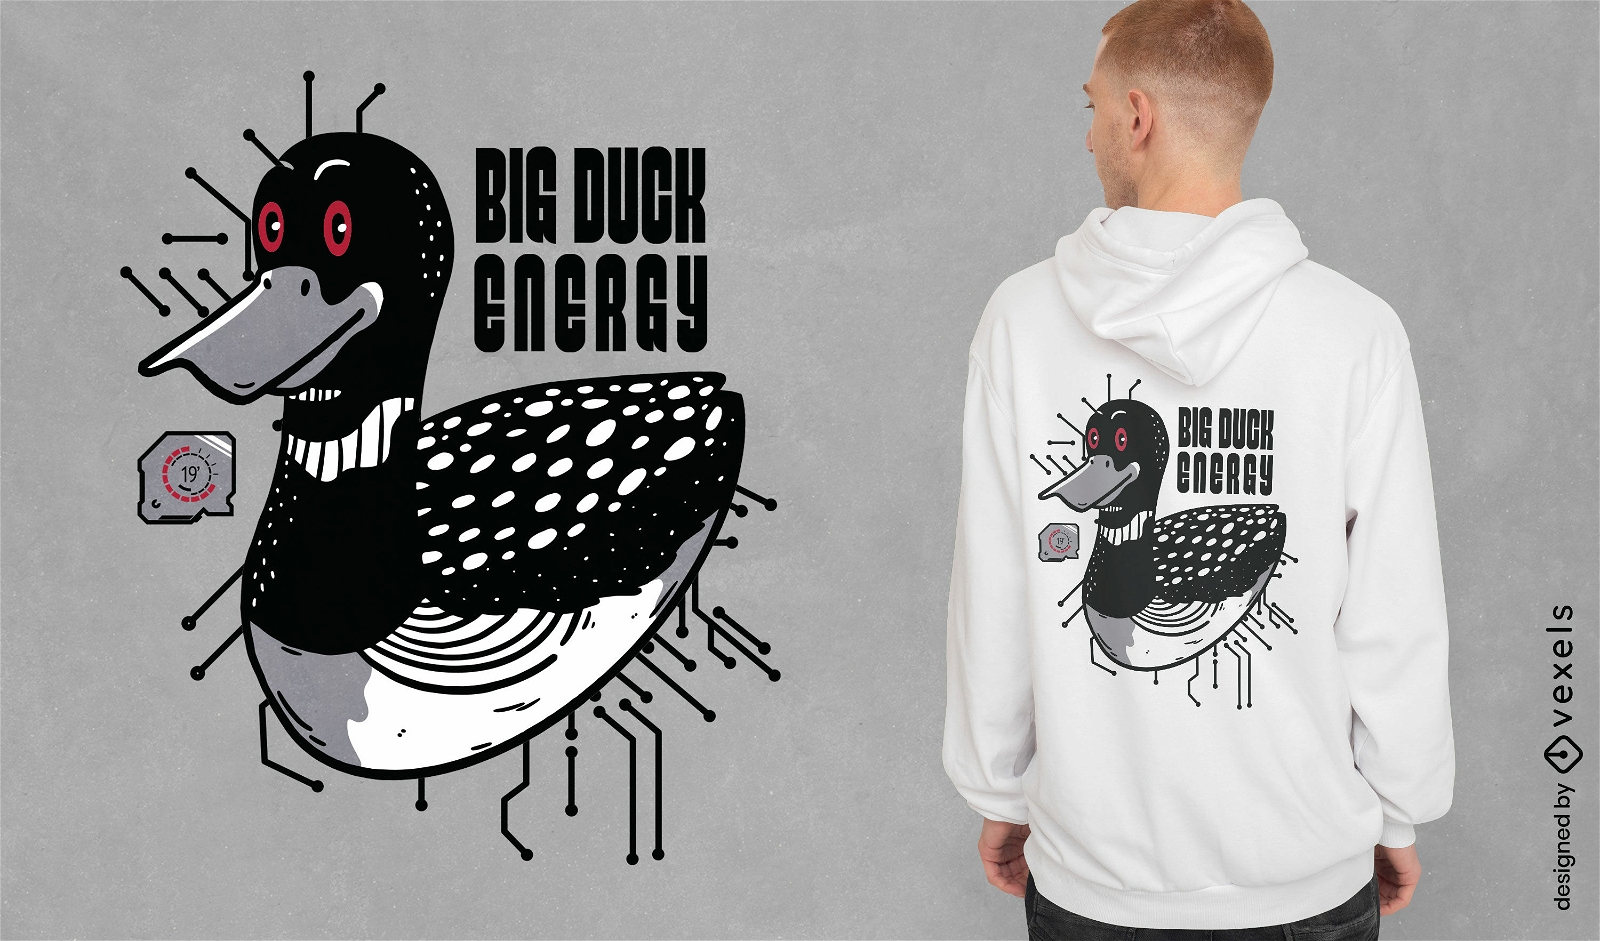 Big duck energy t-shirt design